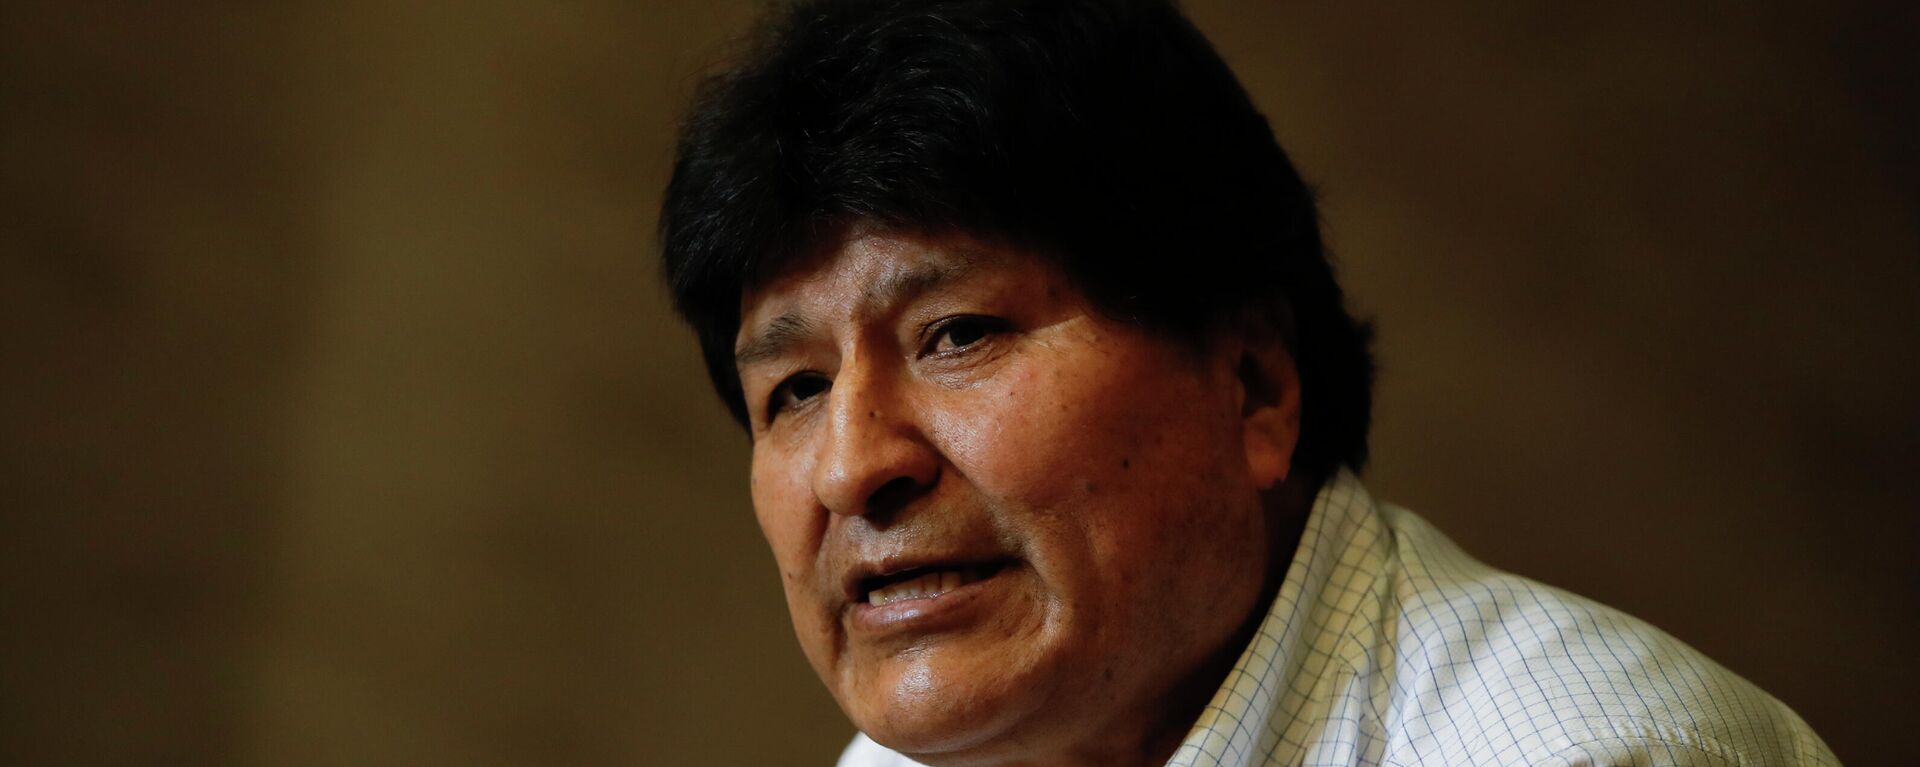 El expresidente socialista boliviano Evo Morales (2006-2019) - Sputnik Mundo, 1920, 17.06.2022